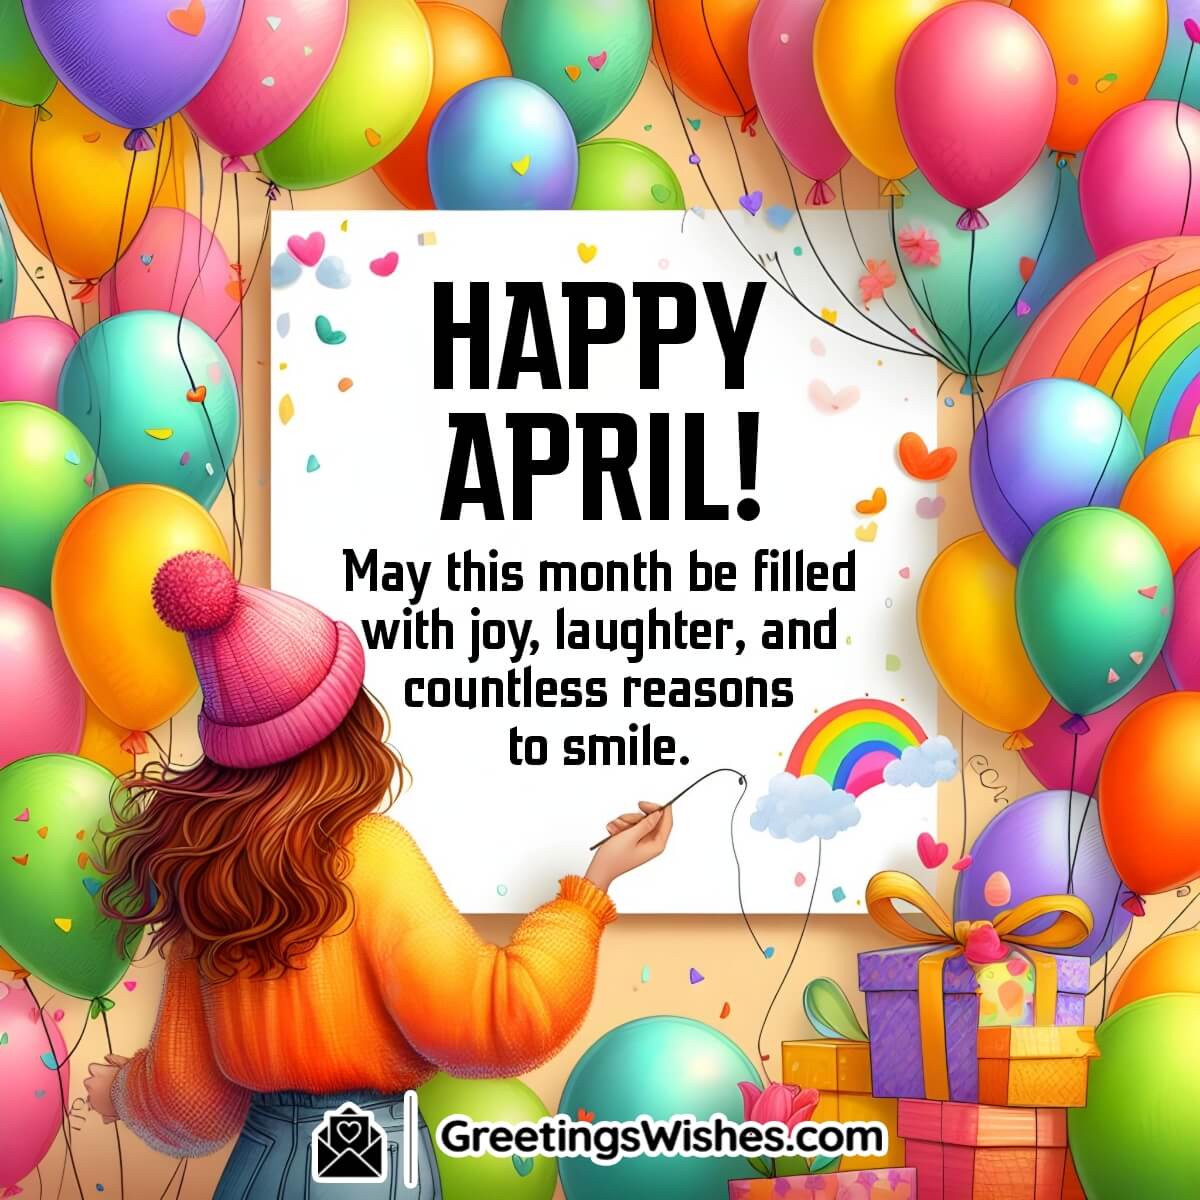 Happy April Month Wish Image